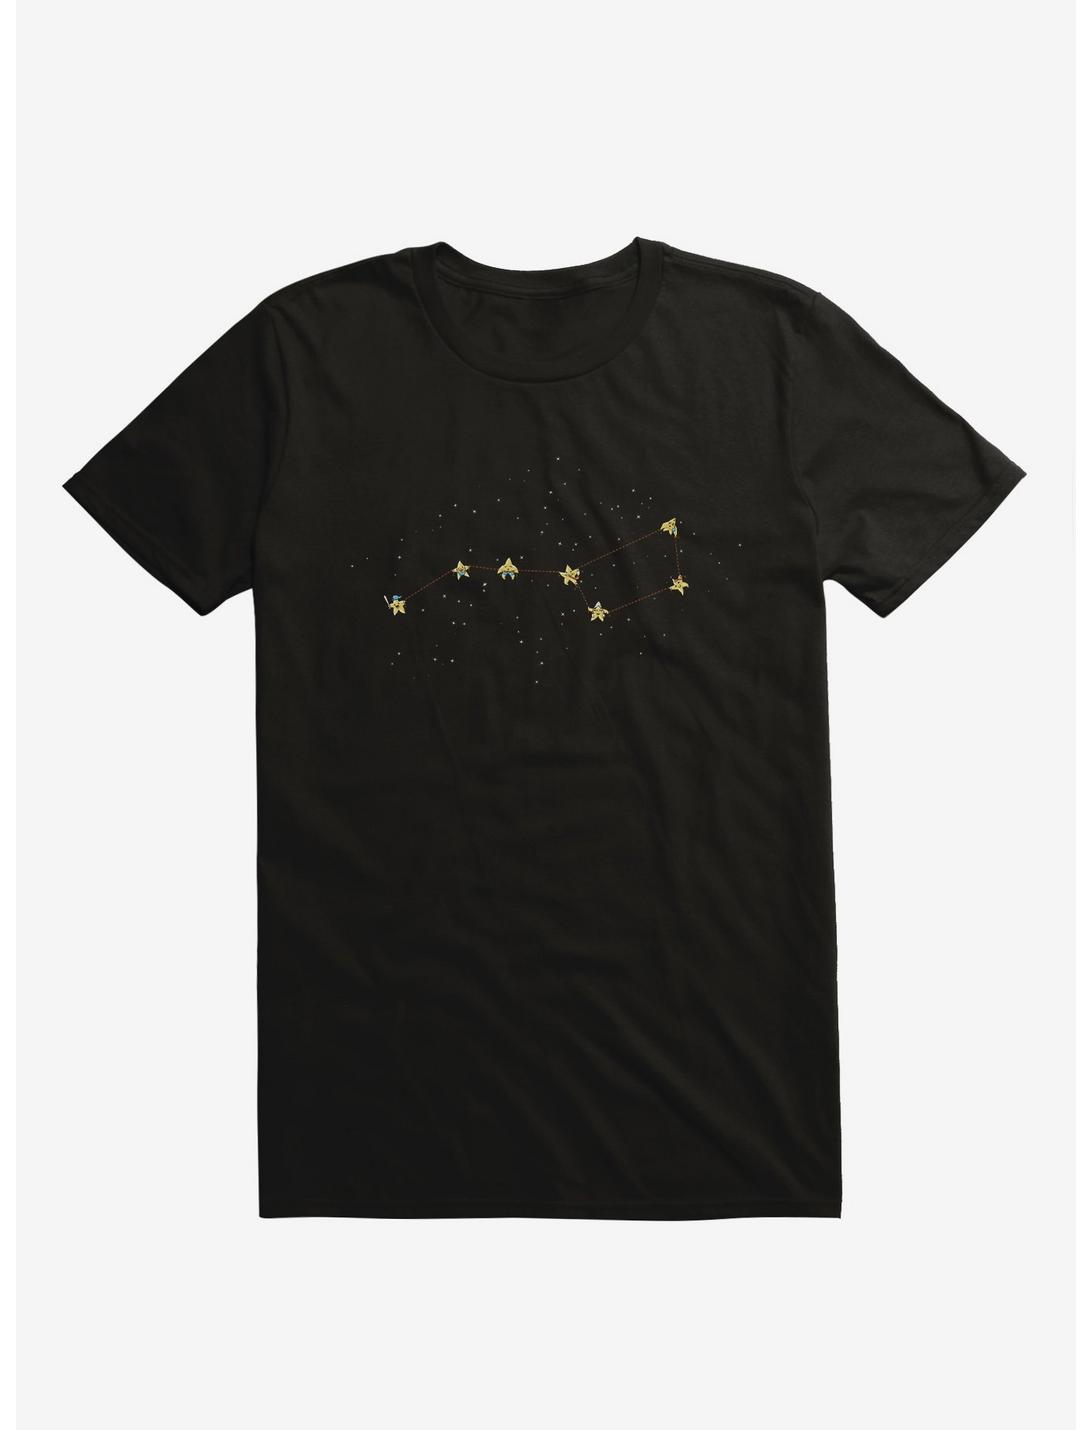 Family Star Constellation Black T-Shirt, BLACK, hi-res